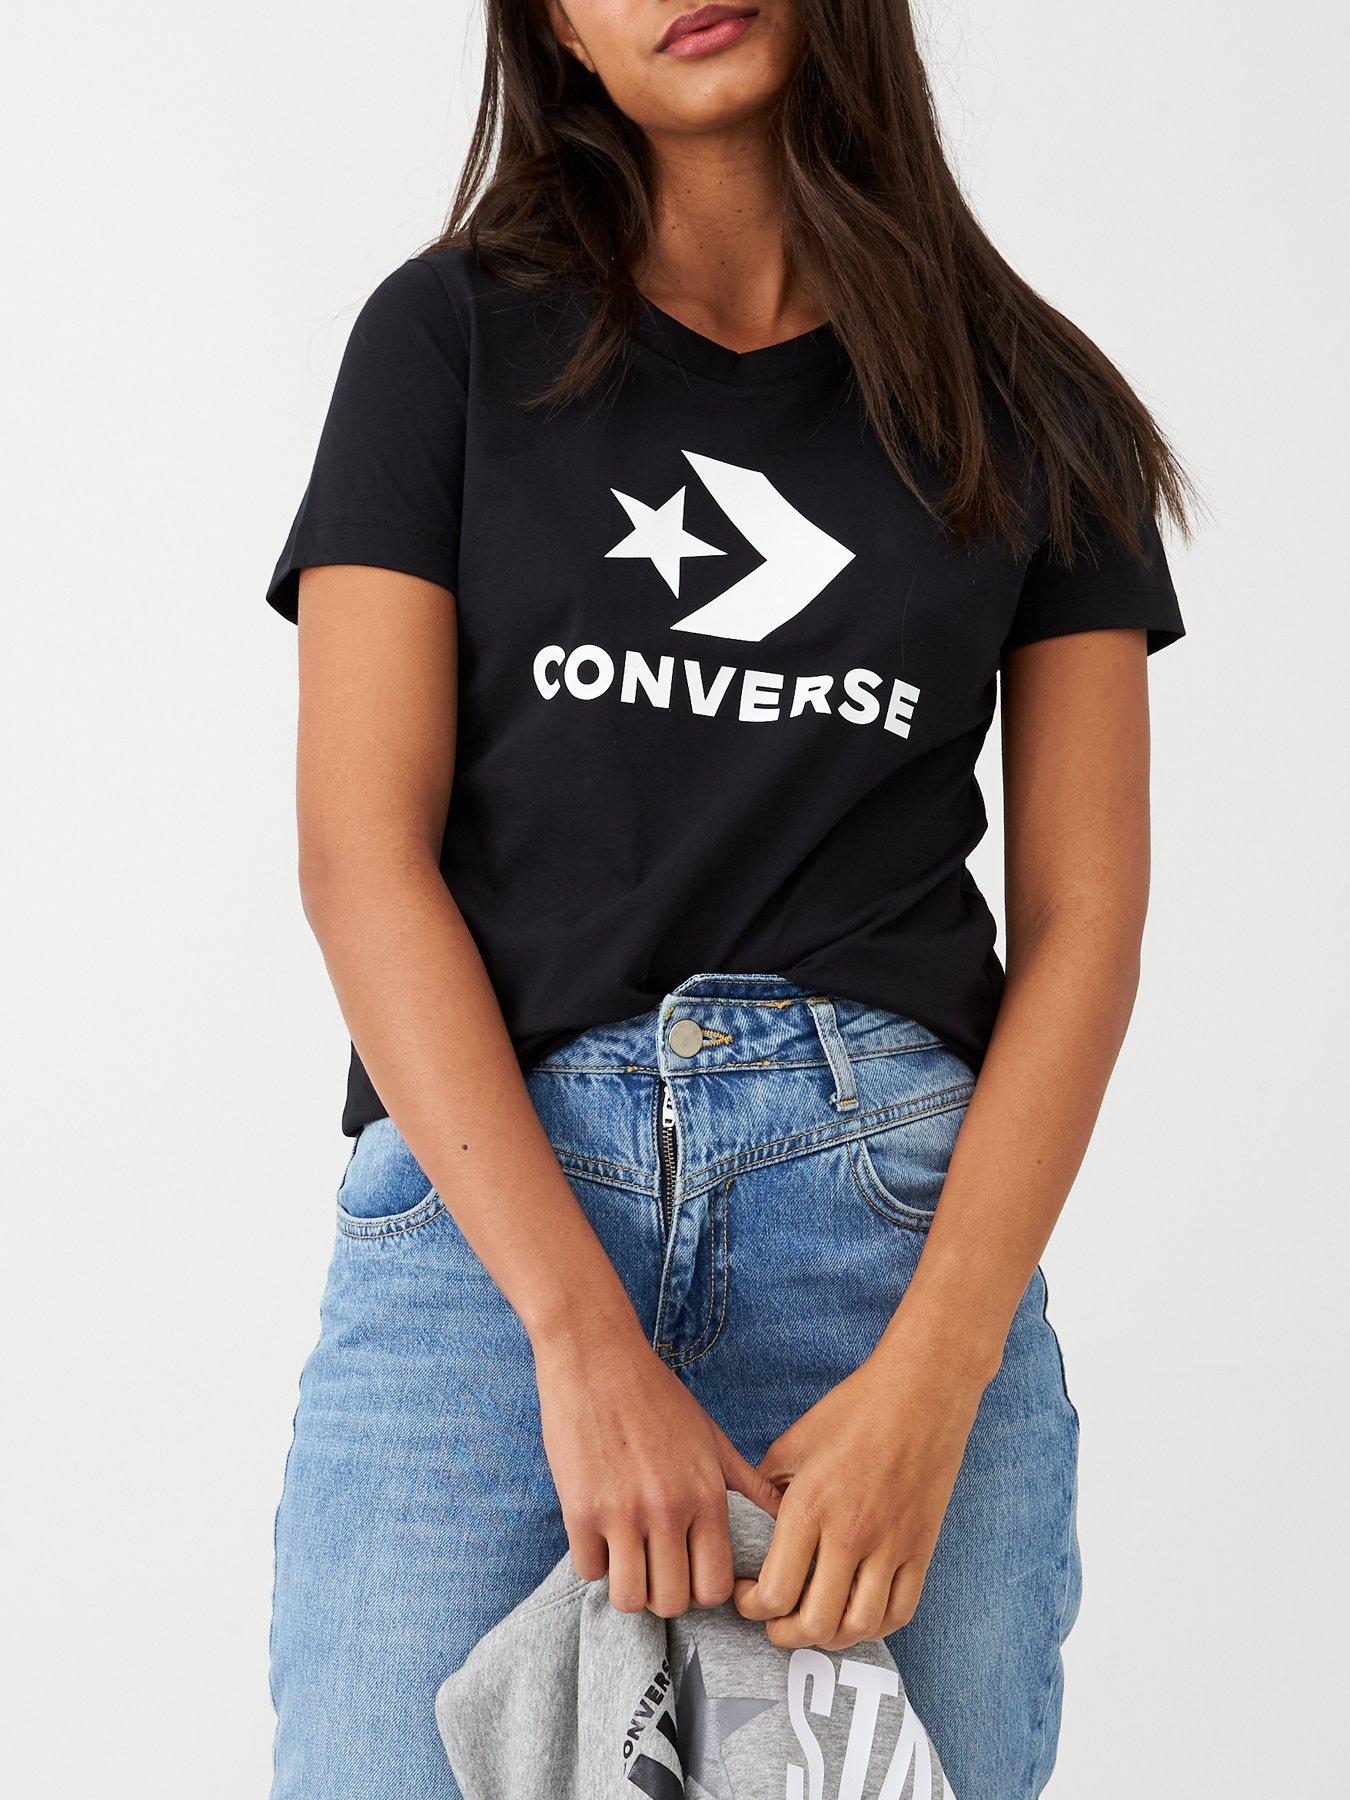 converse women tshirt